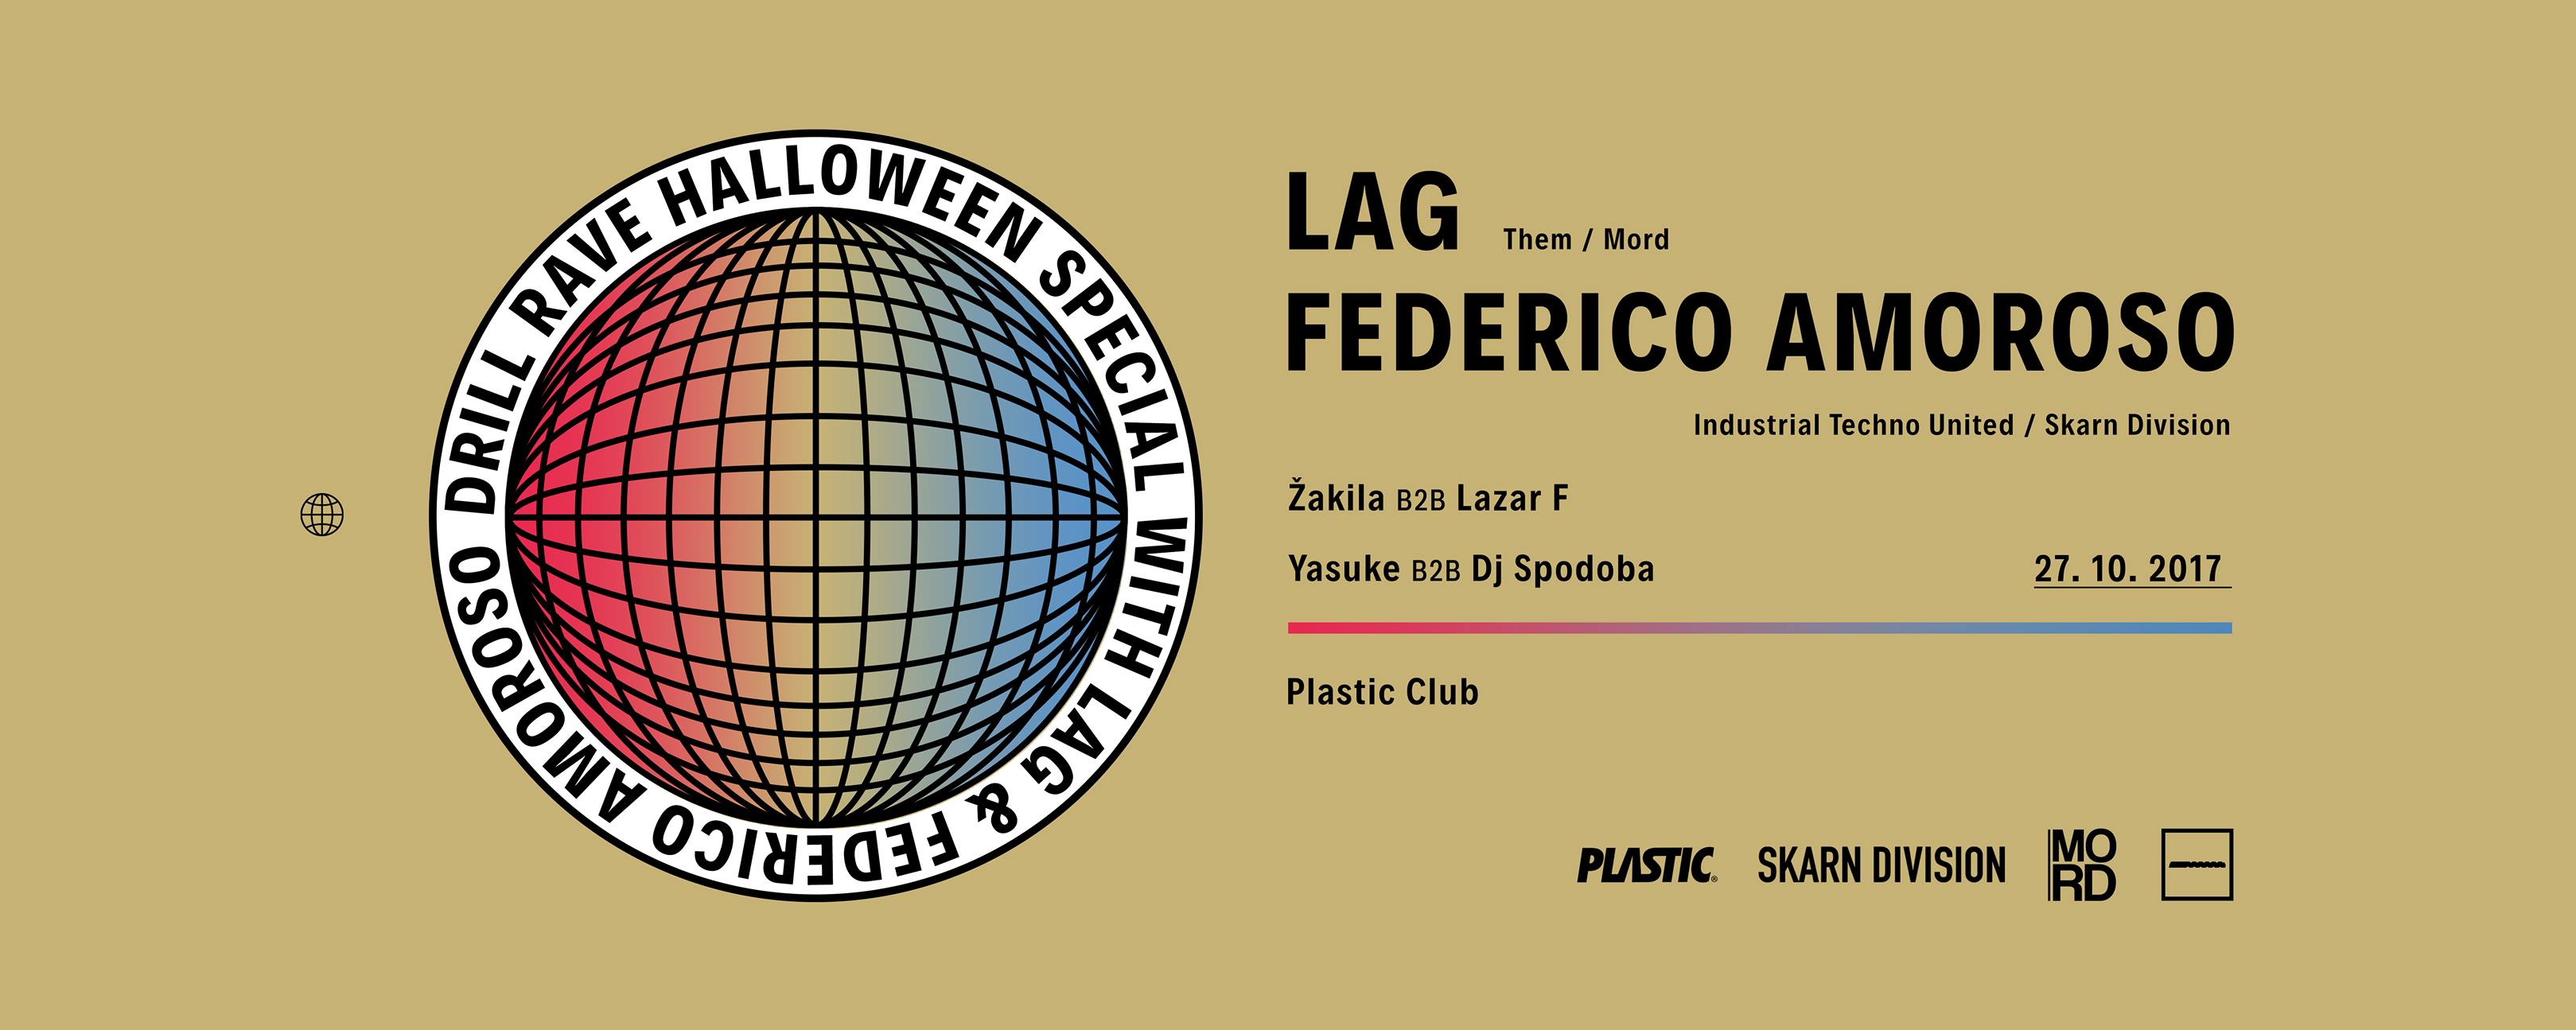 Drill Halloween w/ Lag & Federico Amoroso 27.10.2017. Plastic, Beograd